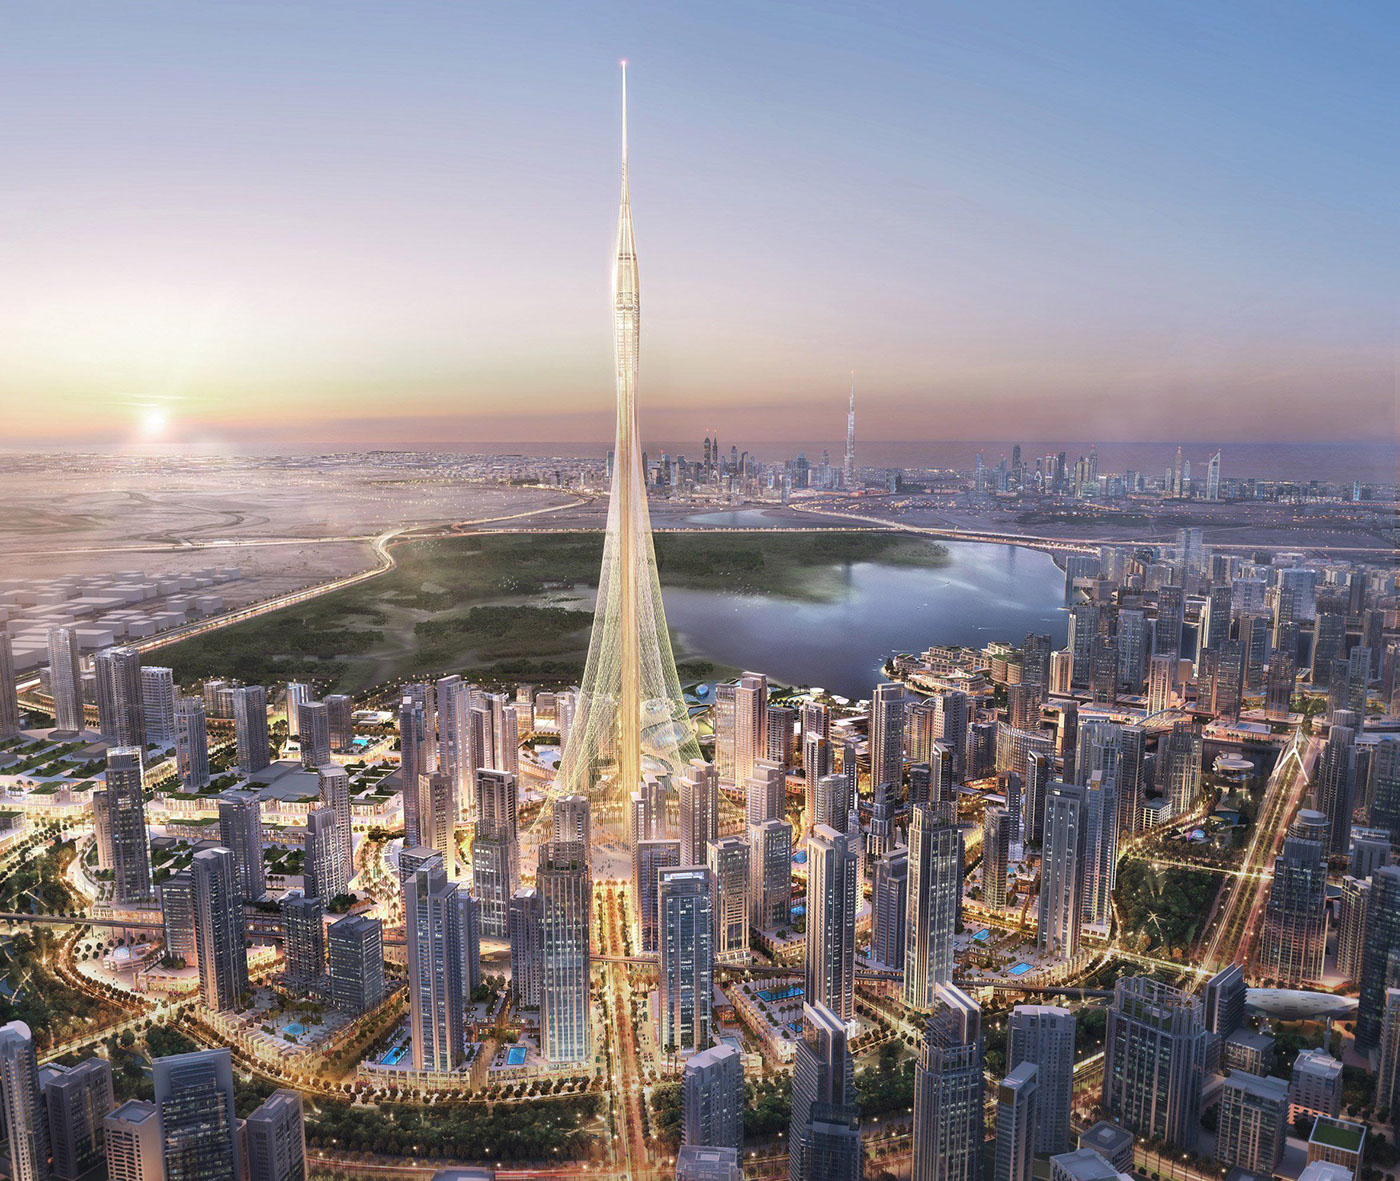 SANTIAGO CALATRAVA’S NEW DUBAI TOWER GETS Underway